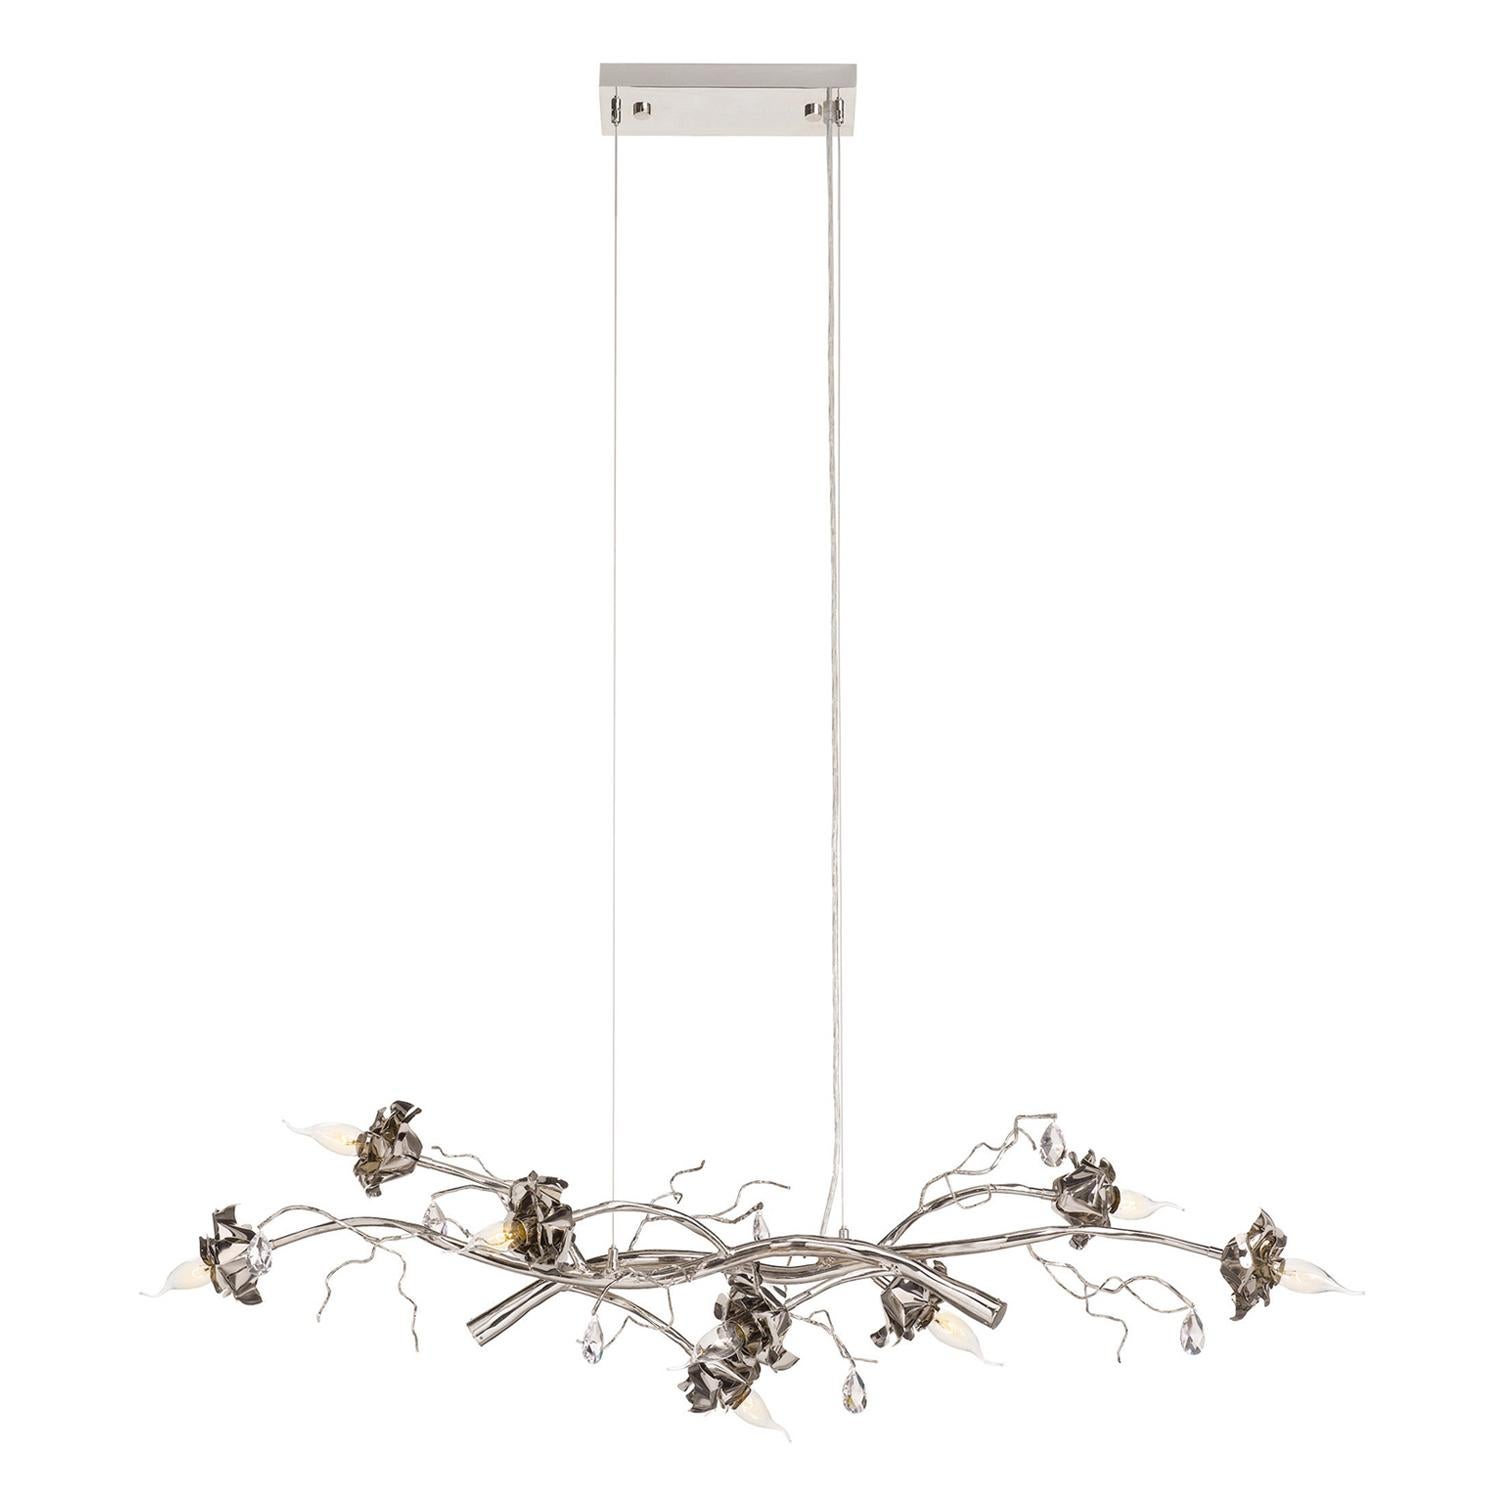 Lampe à suspension moderne en finition nickel, collection La Vie En Rose, de Brand Van  en vente